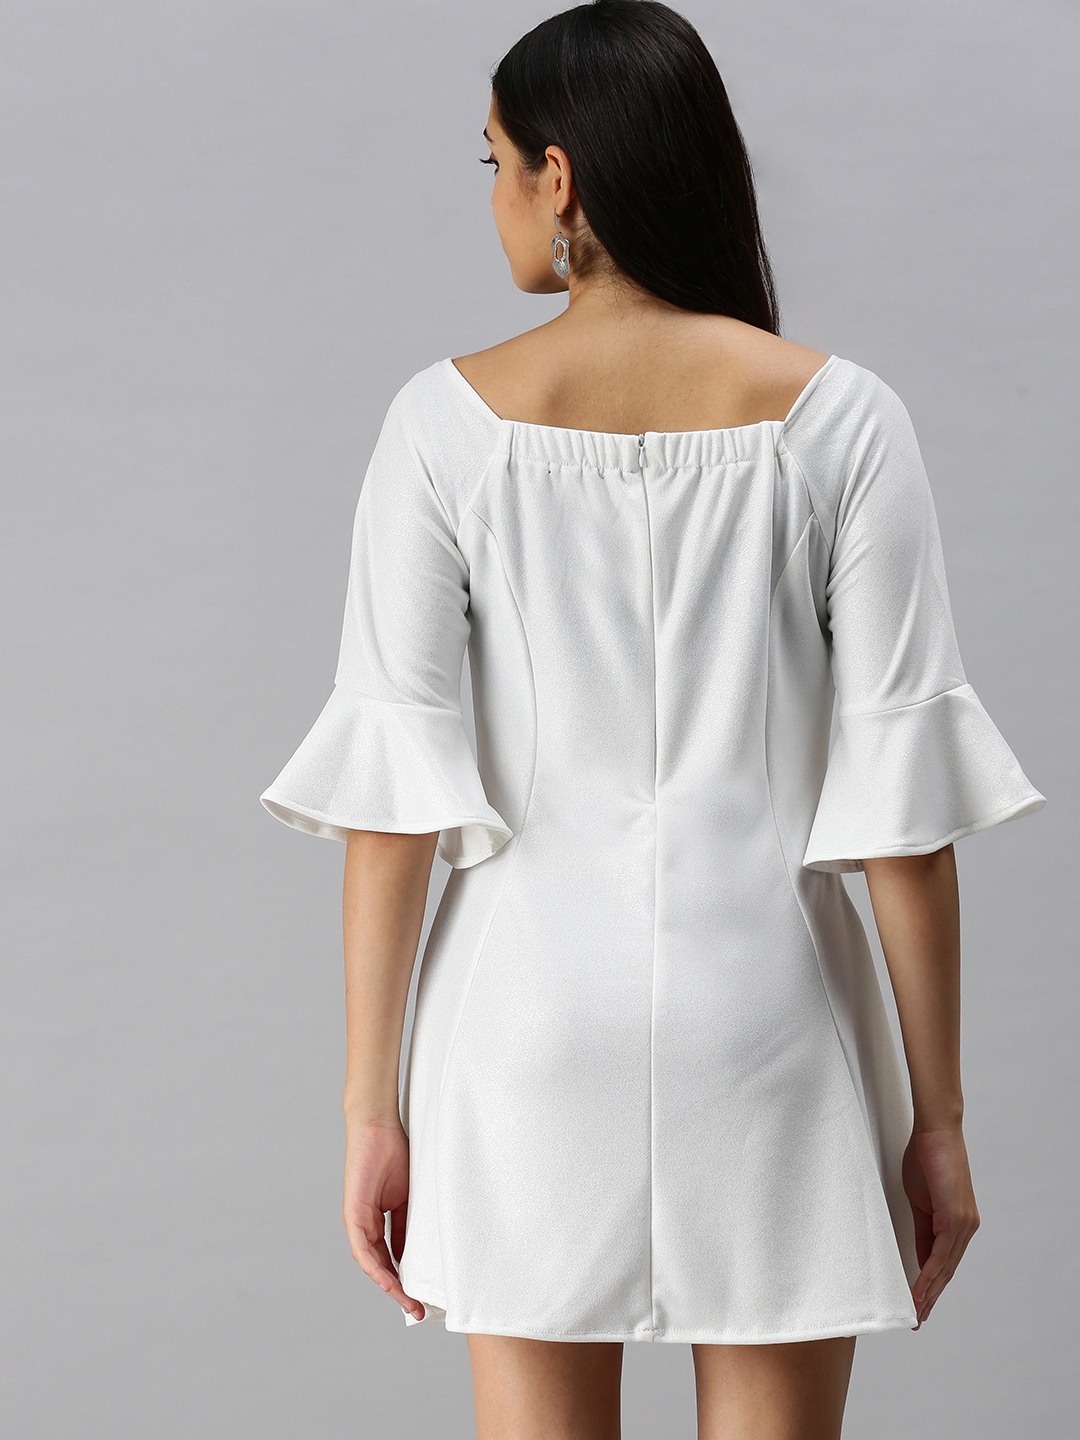 Showoff | SHOWOFF Women's Fit and Flare Off-Shoulder White Solid Dress 2